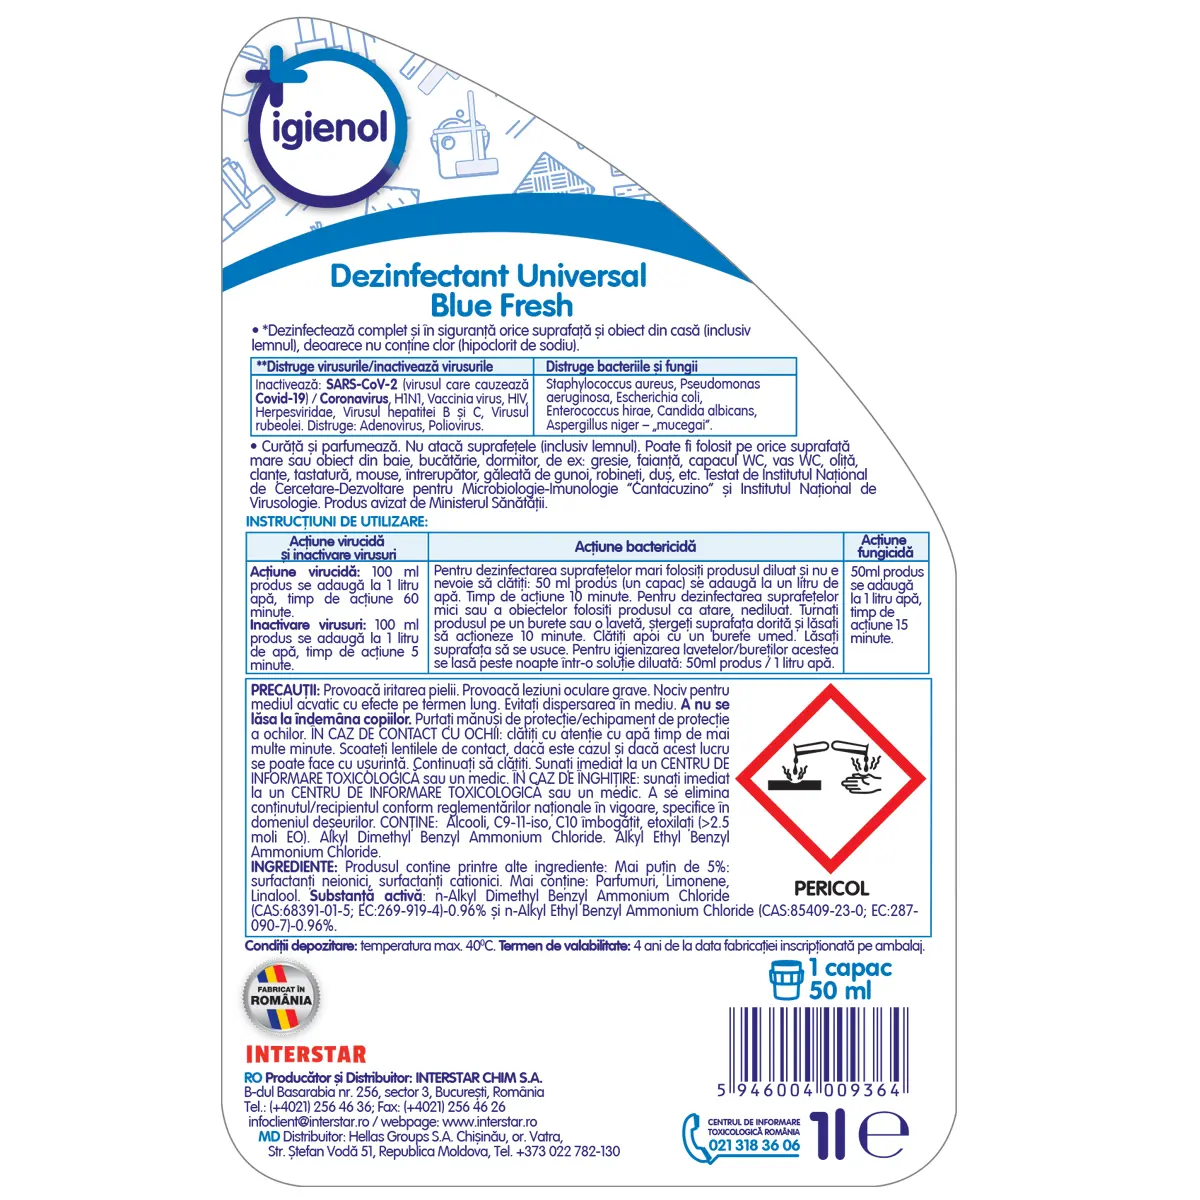 Dezinfectant universal Blue Fresh Igienol 1L